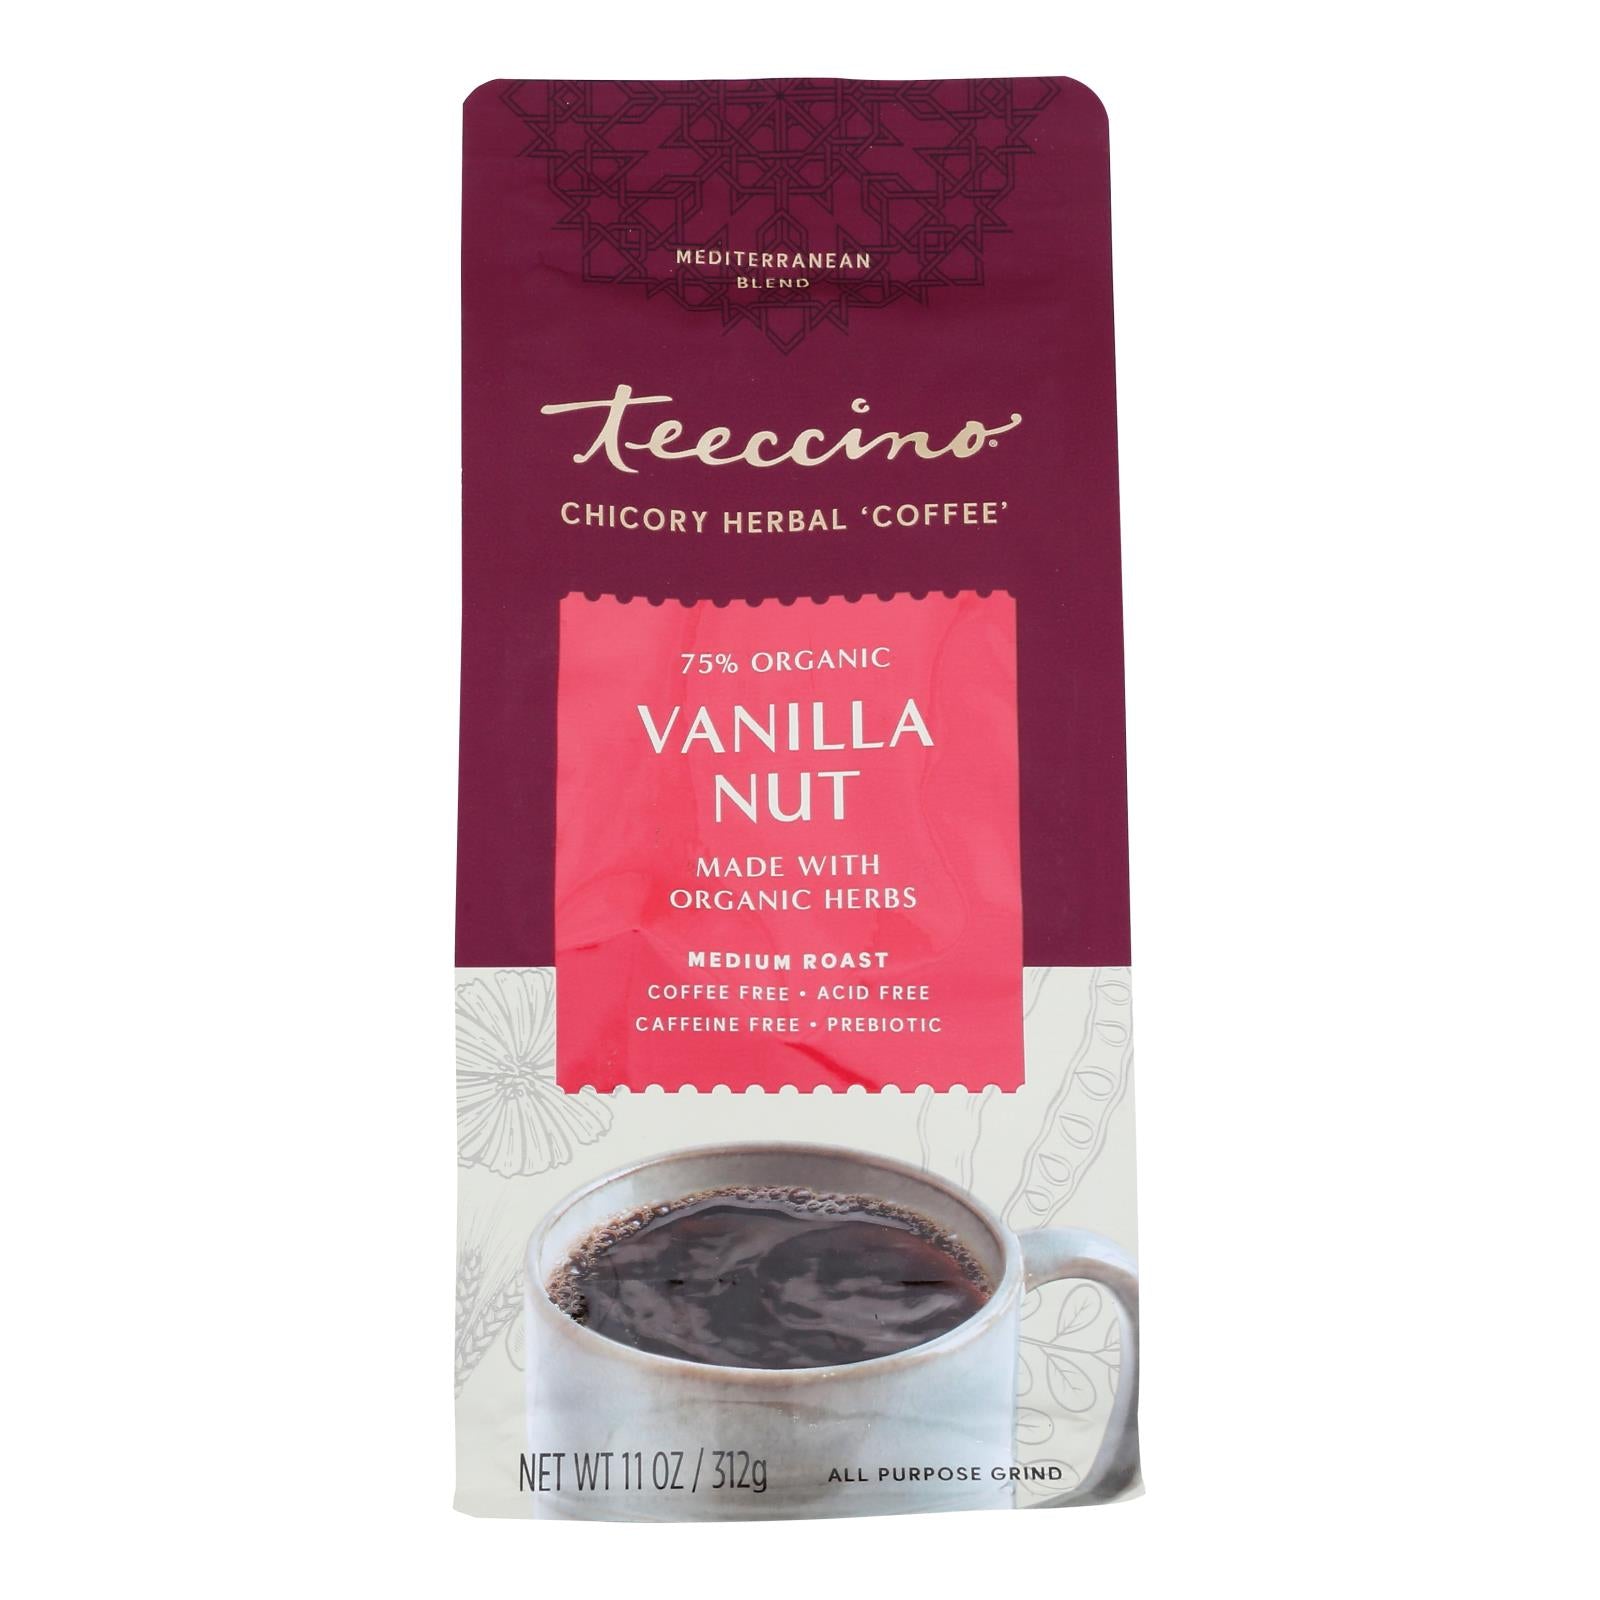 Teeccino Mediterranean Herbal Coffee Vanilla Nut - 11 Oz - Case Of 6